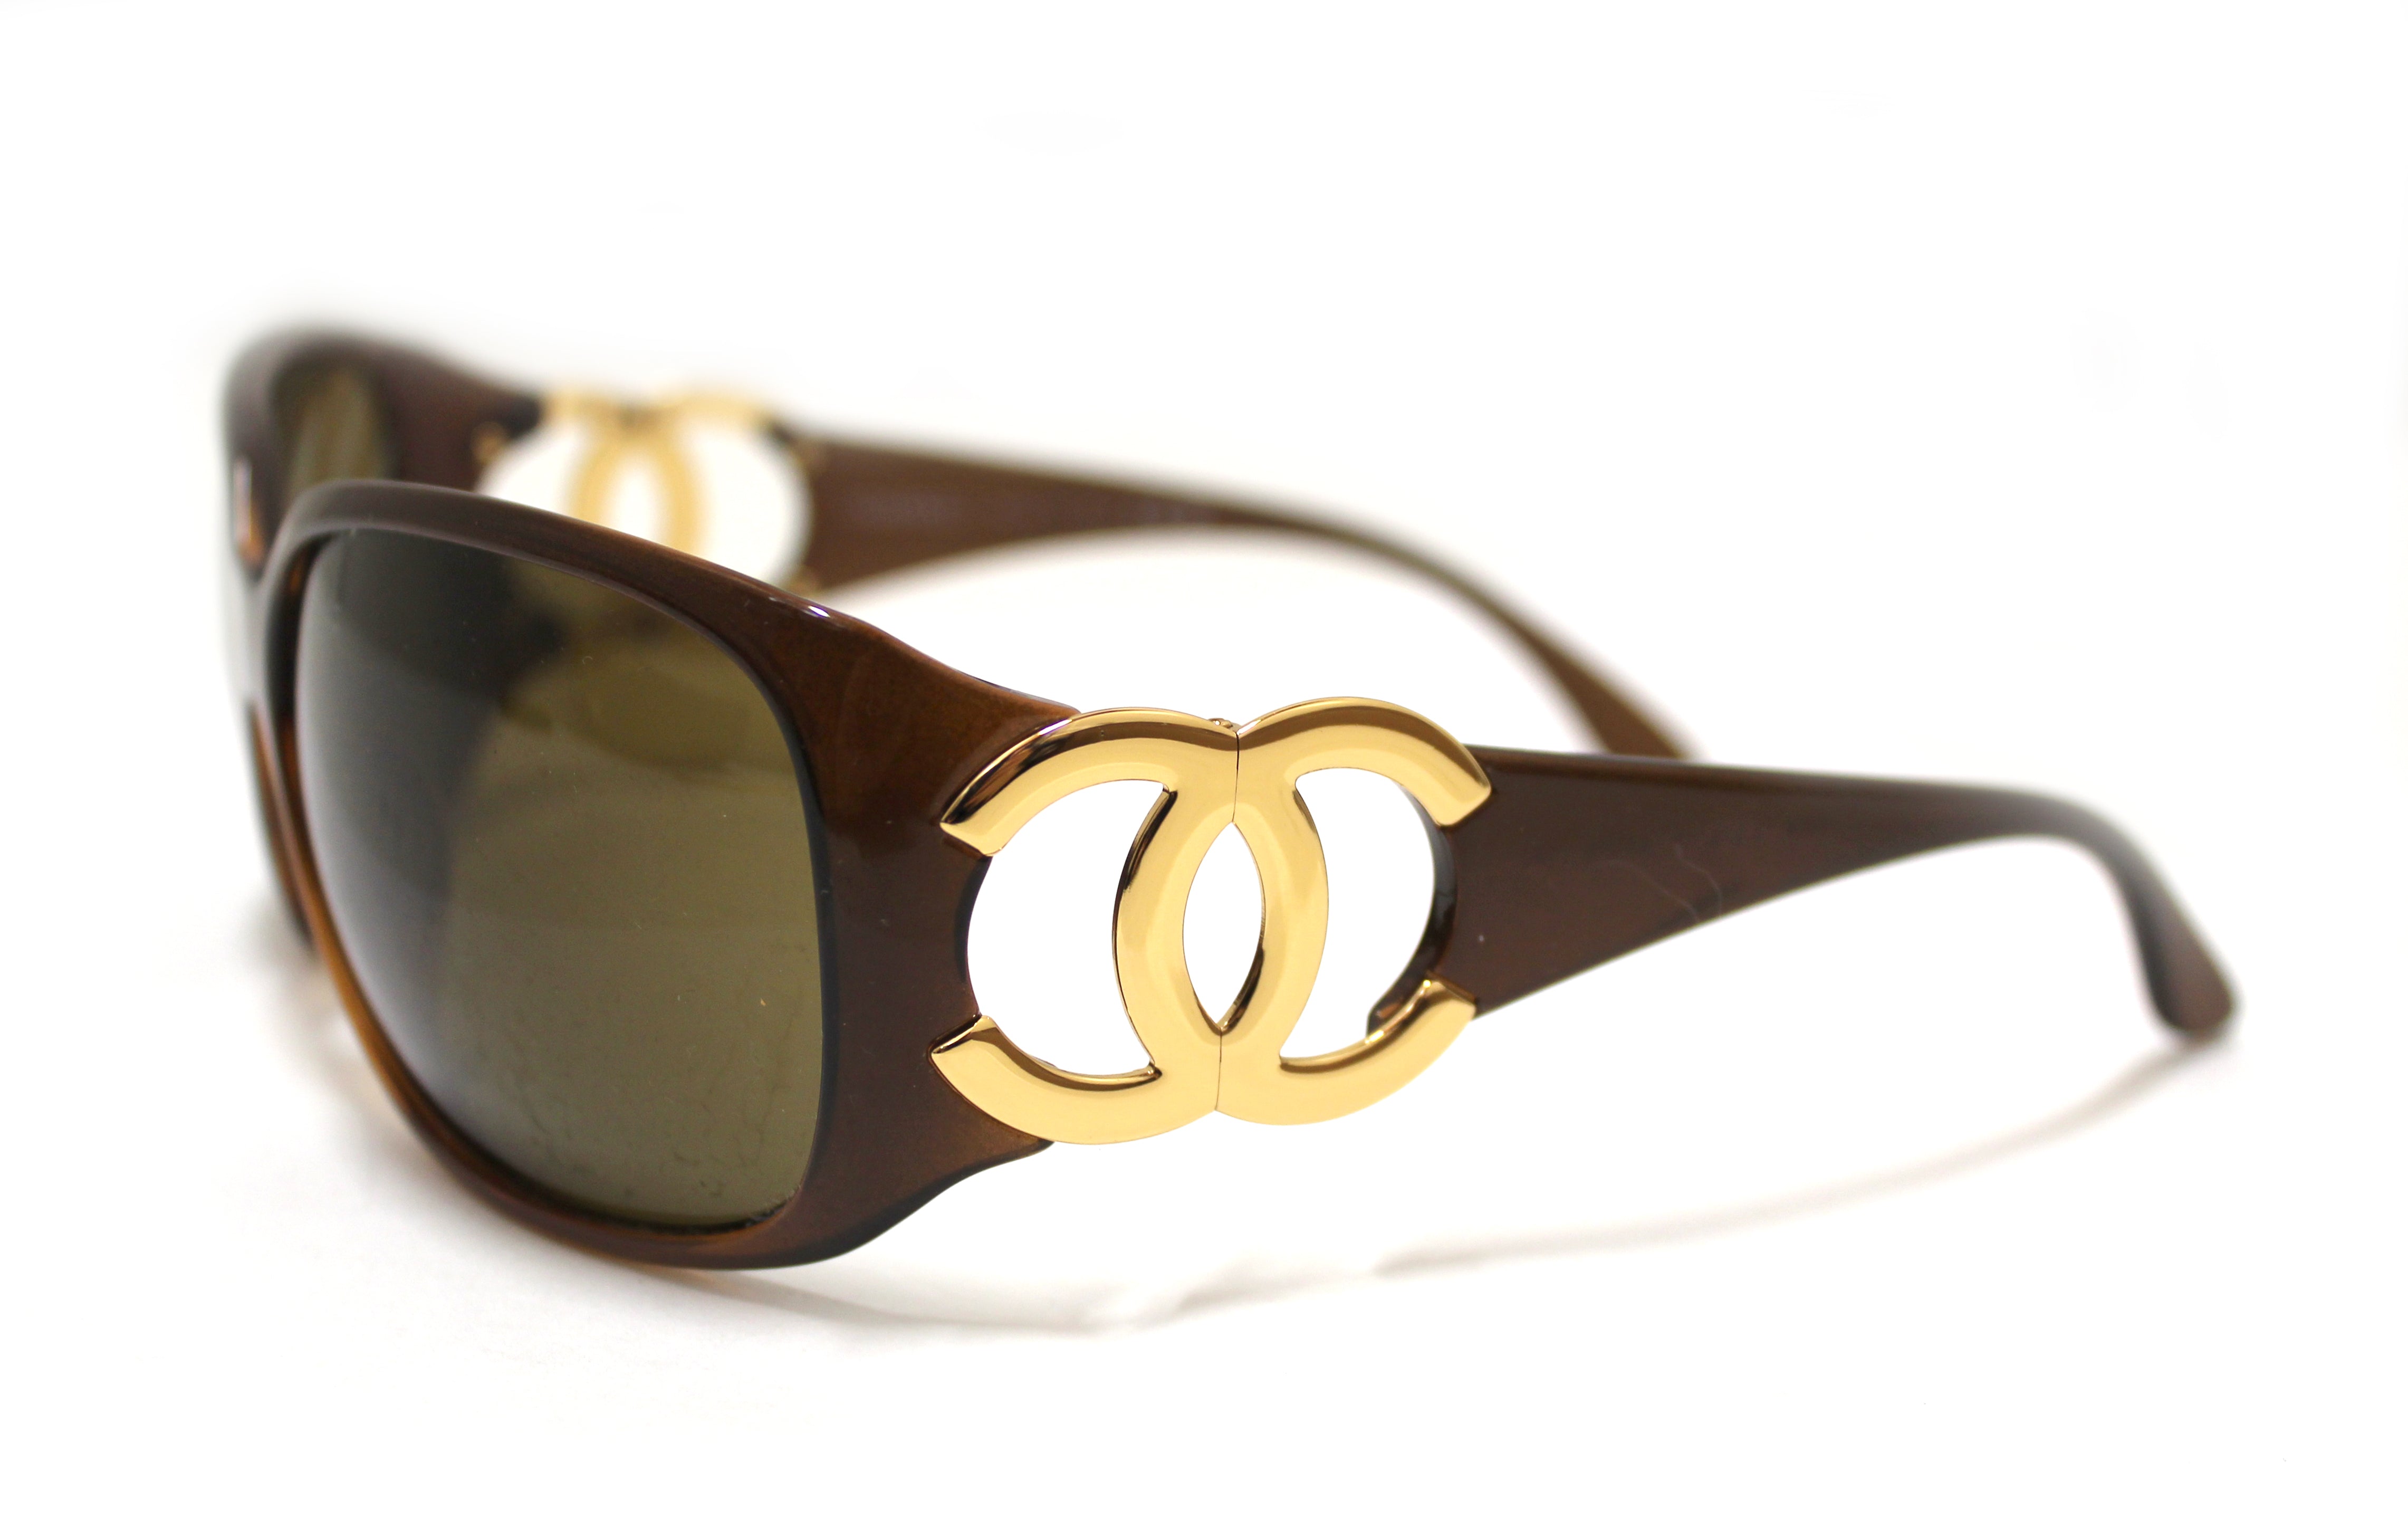 Authentic Chanel Tortoise shell Sunglasses 6014